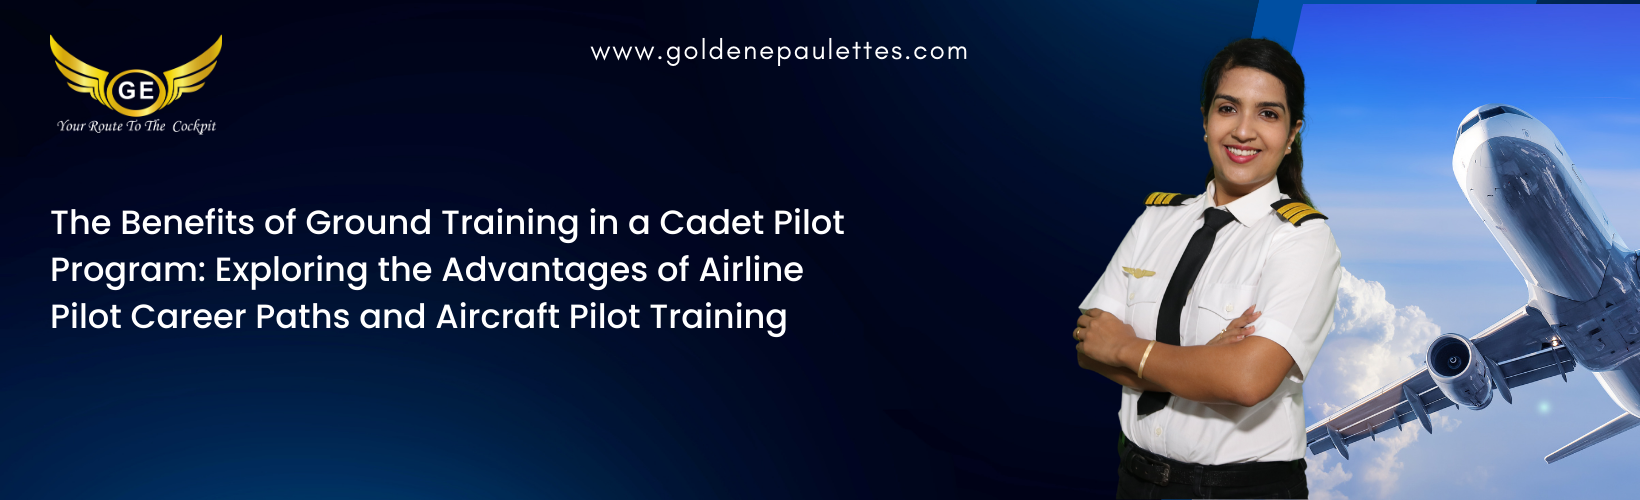 Cadet Pilot Program